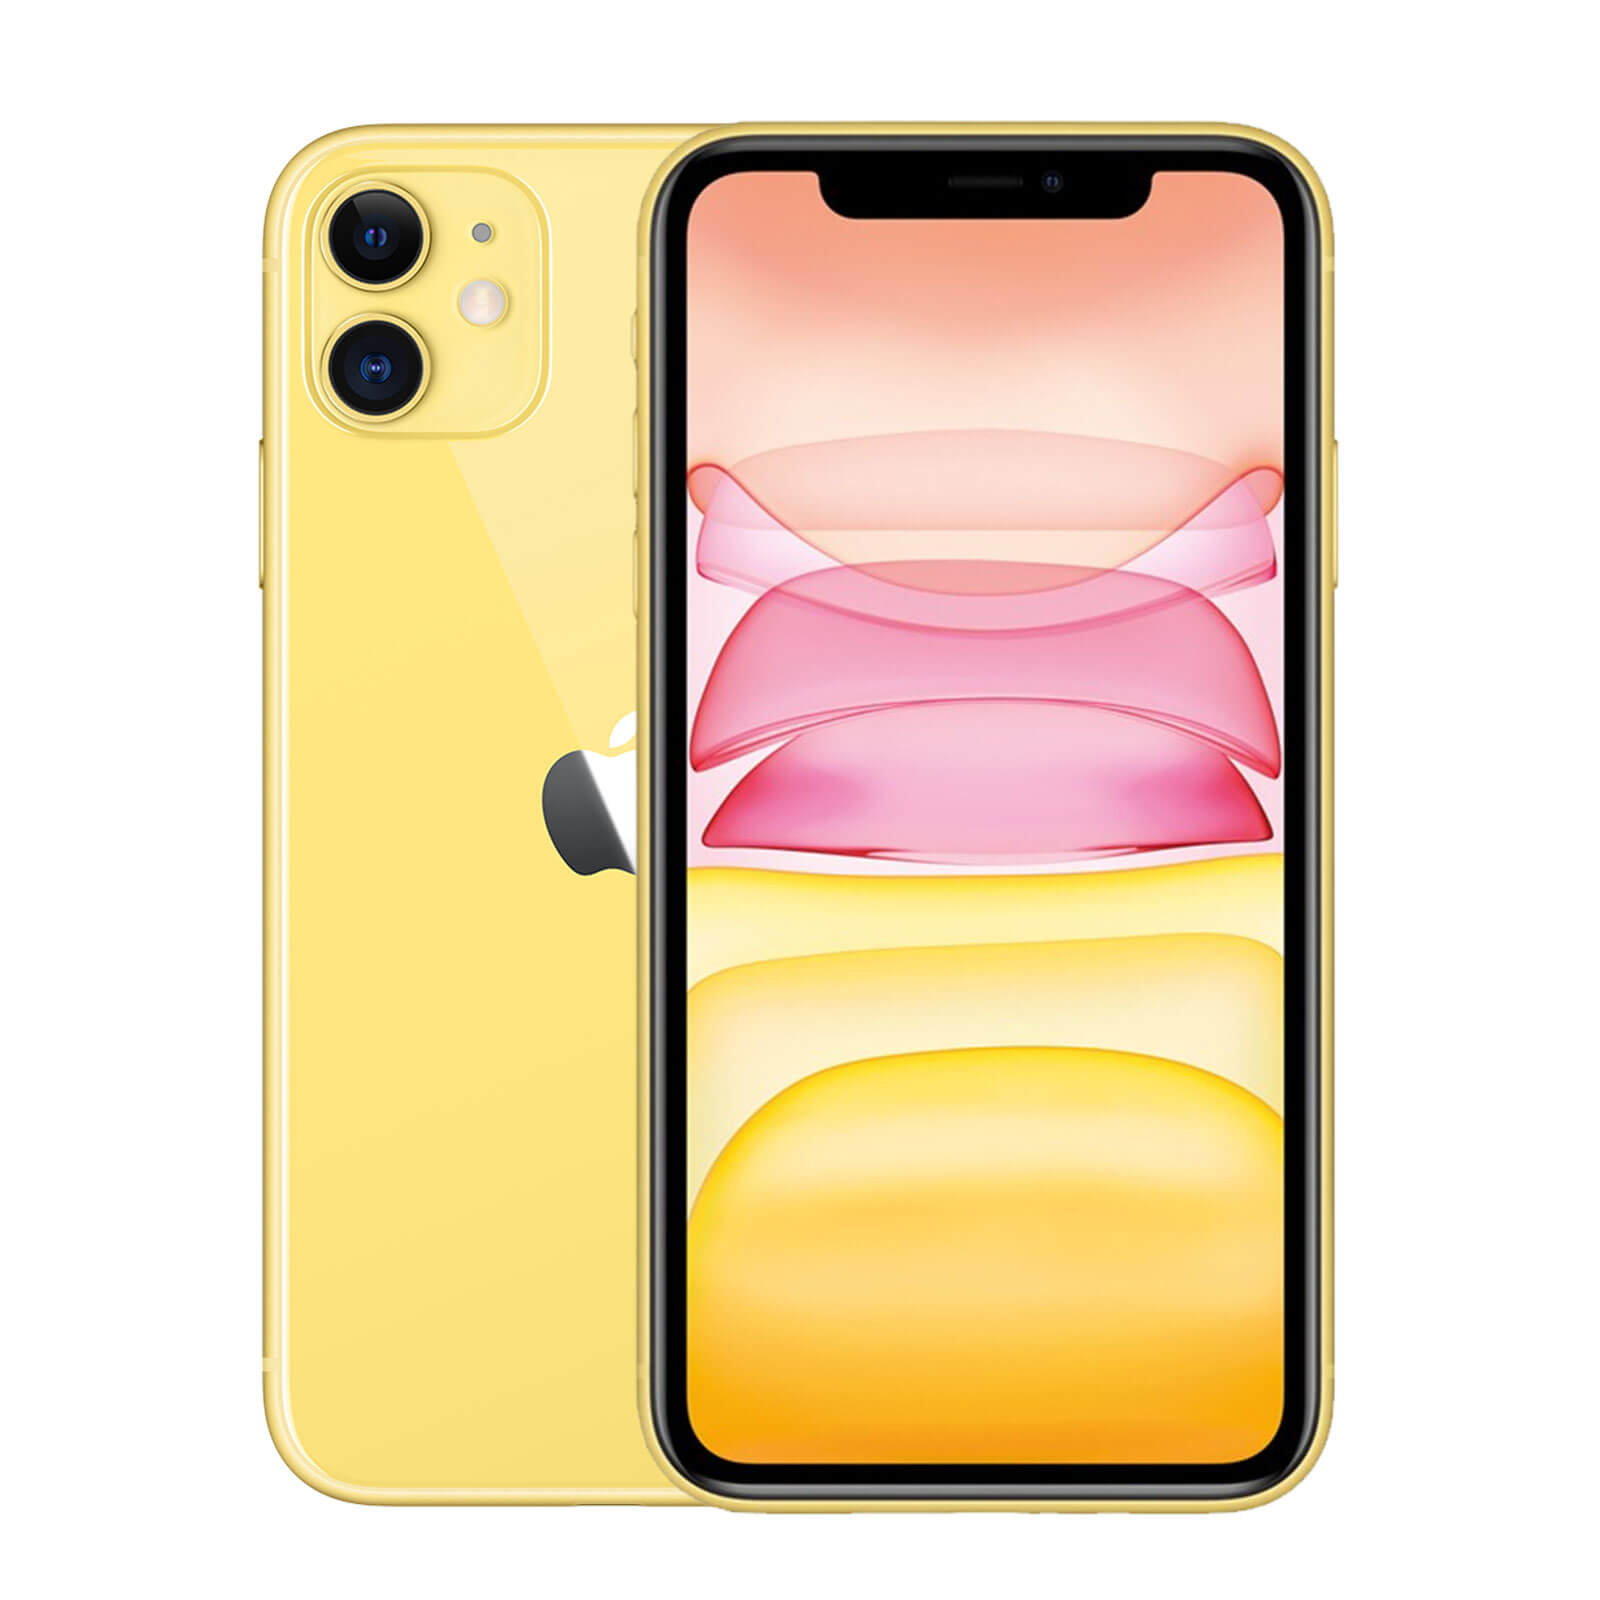 Apple iPhone 11 128GB Yellow Good - T-Mobile